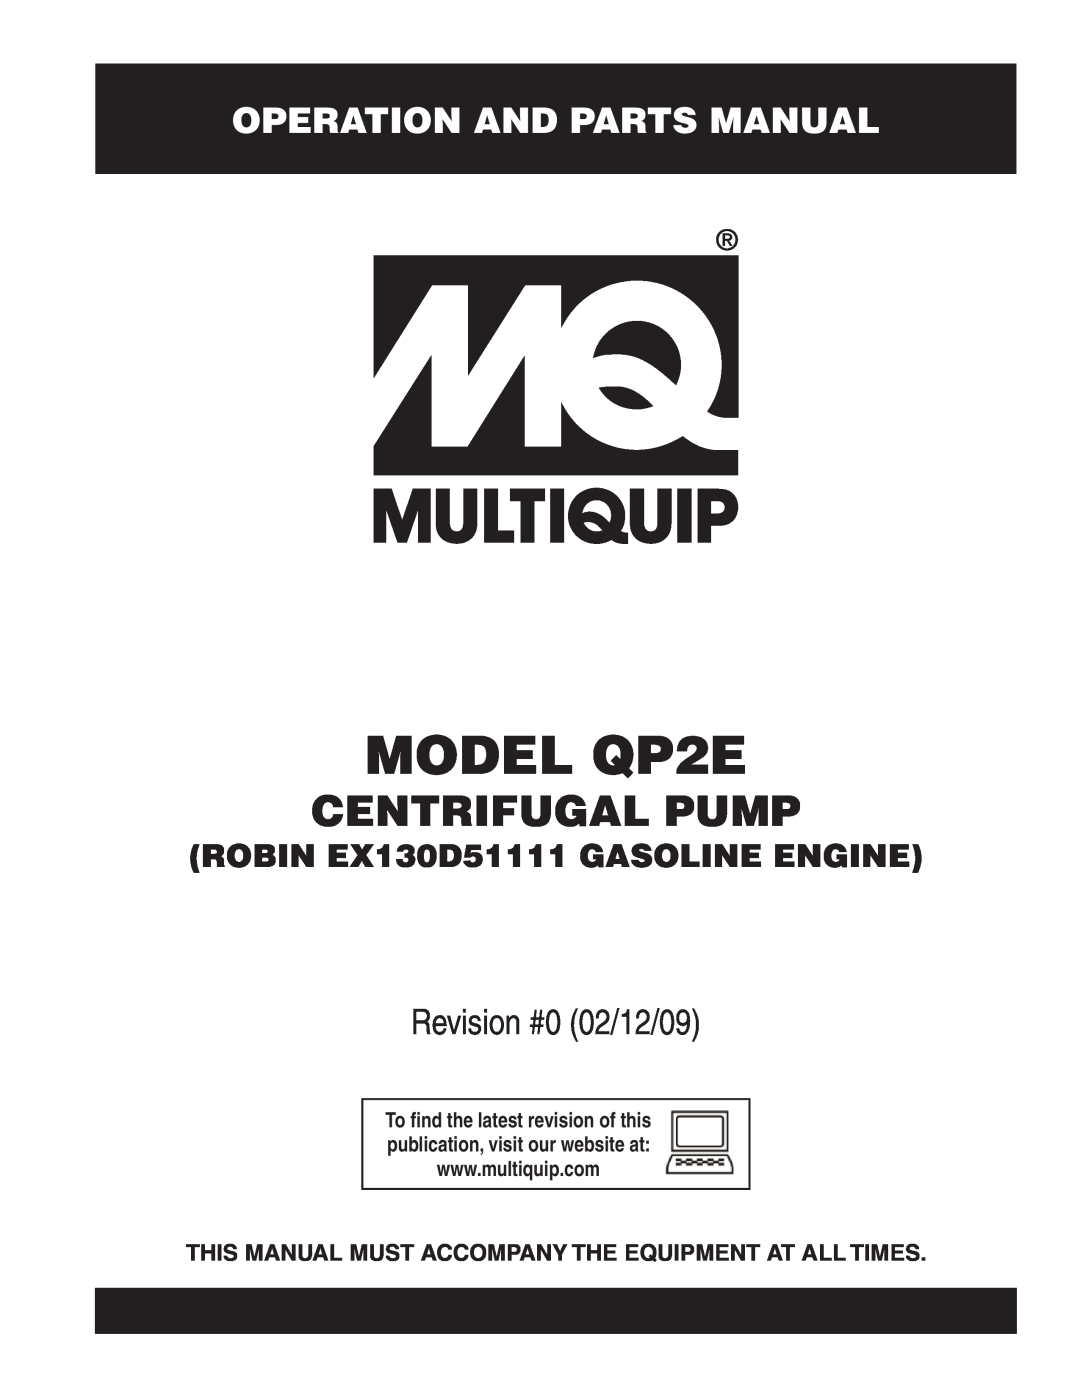 Multiquip manual Operation And Parts Manual, MODEL QP2E, Centrifugal Pump, Revision #0 02/12/09 